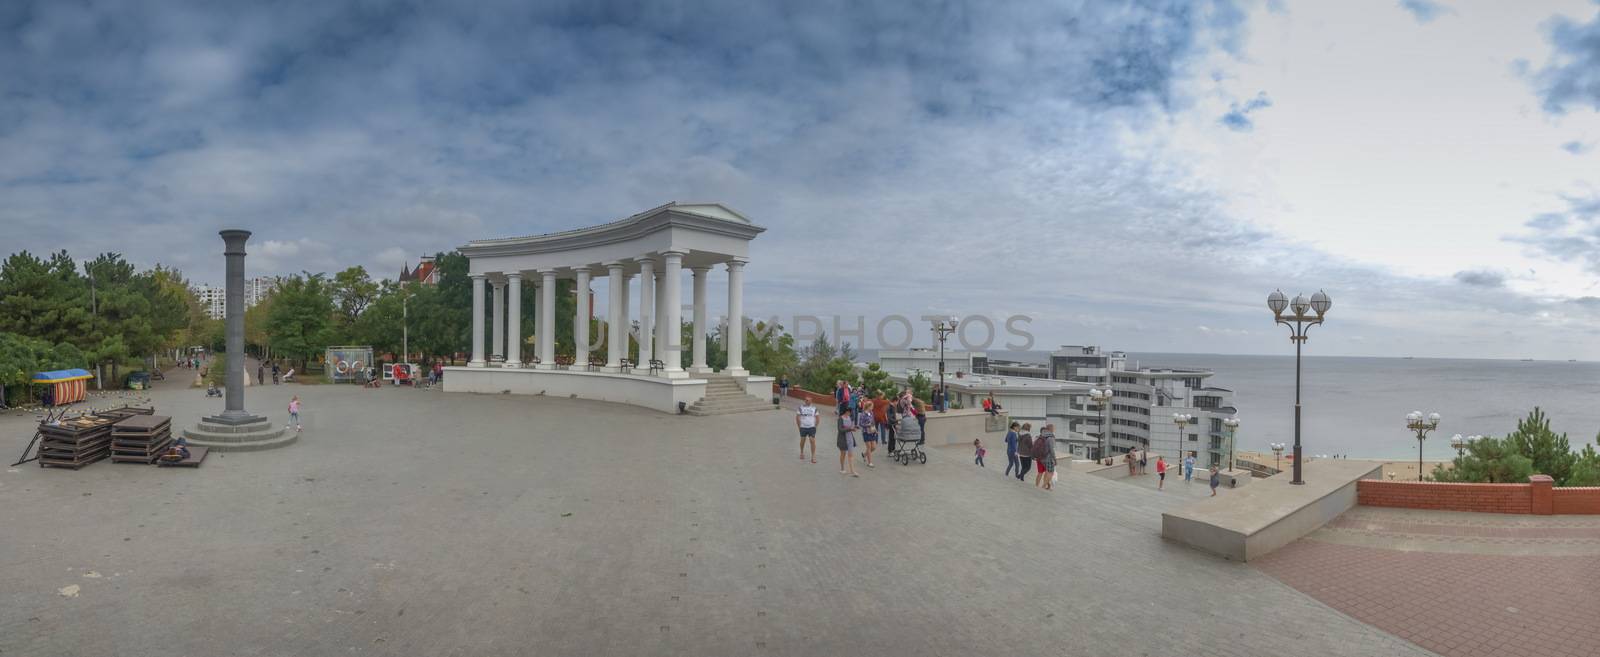 Chernomorsk sity near Odessa, Ukraine by Multipedia